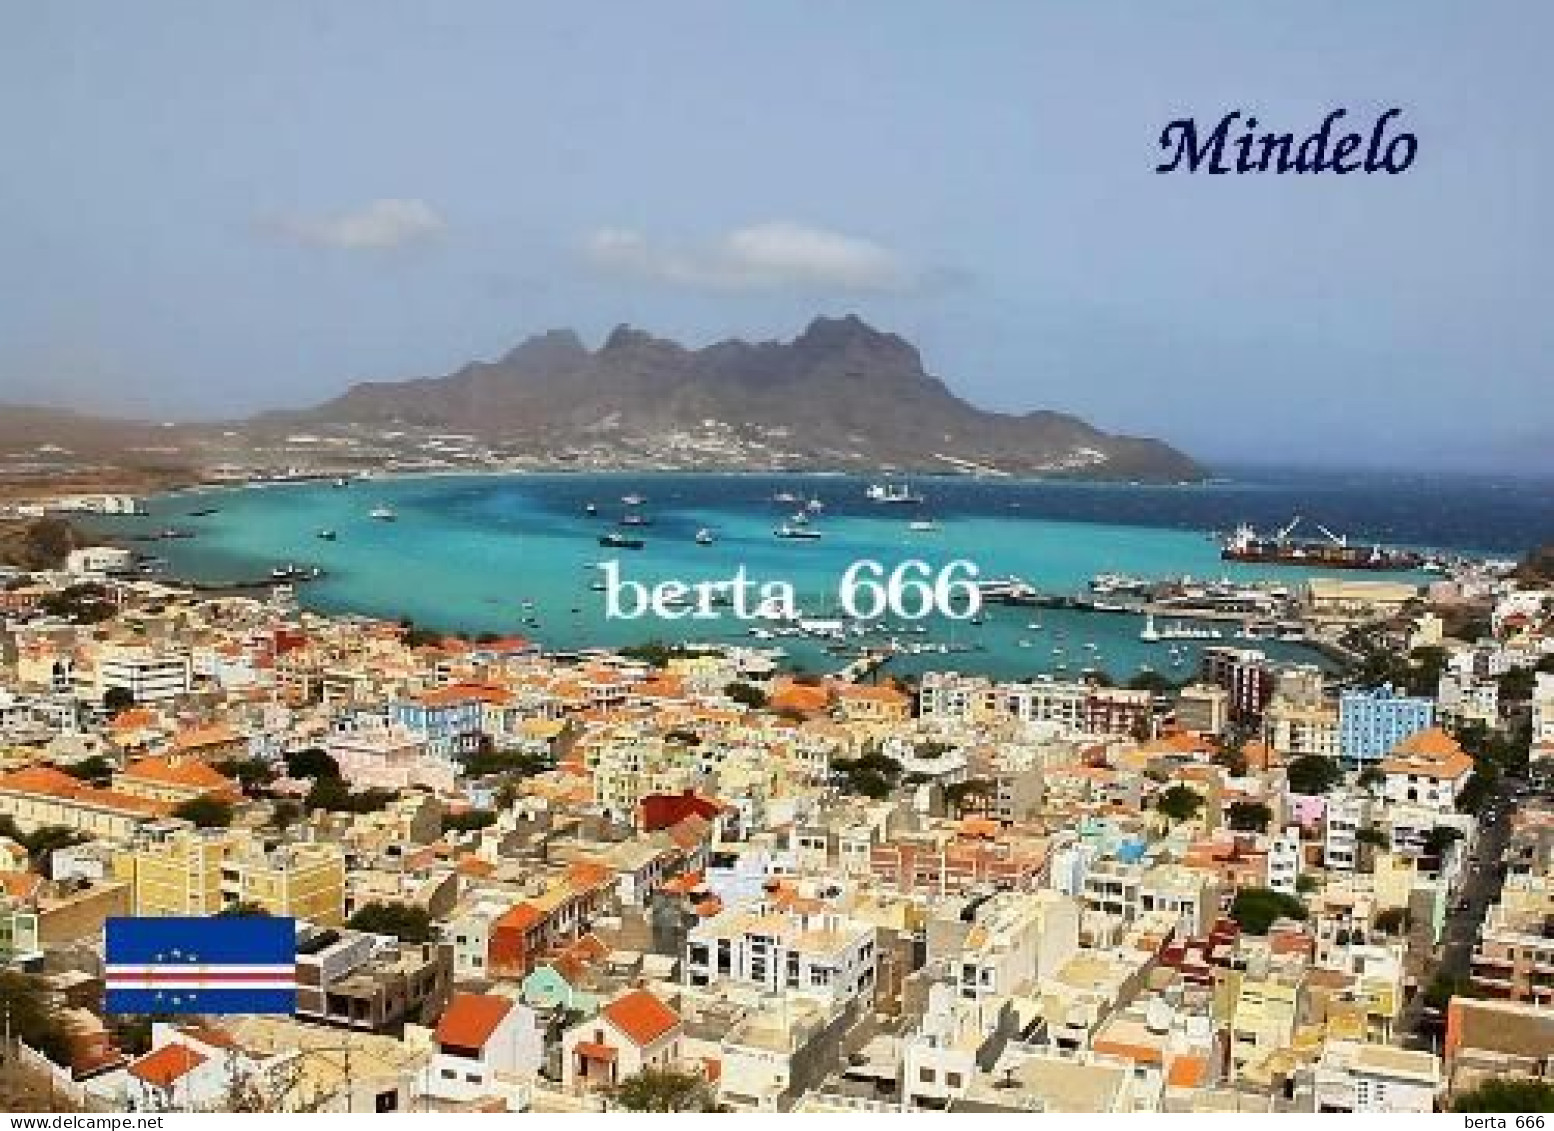 Cape Verde Mindelo Aerial View New Postcard - Capo Verde